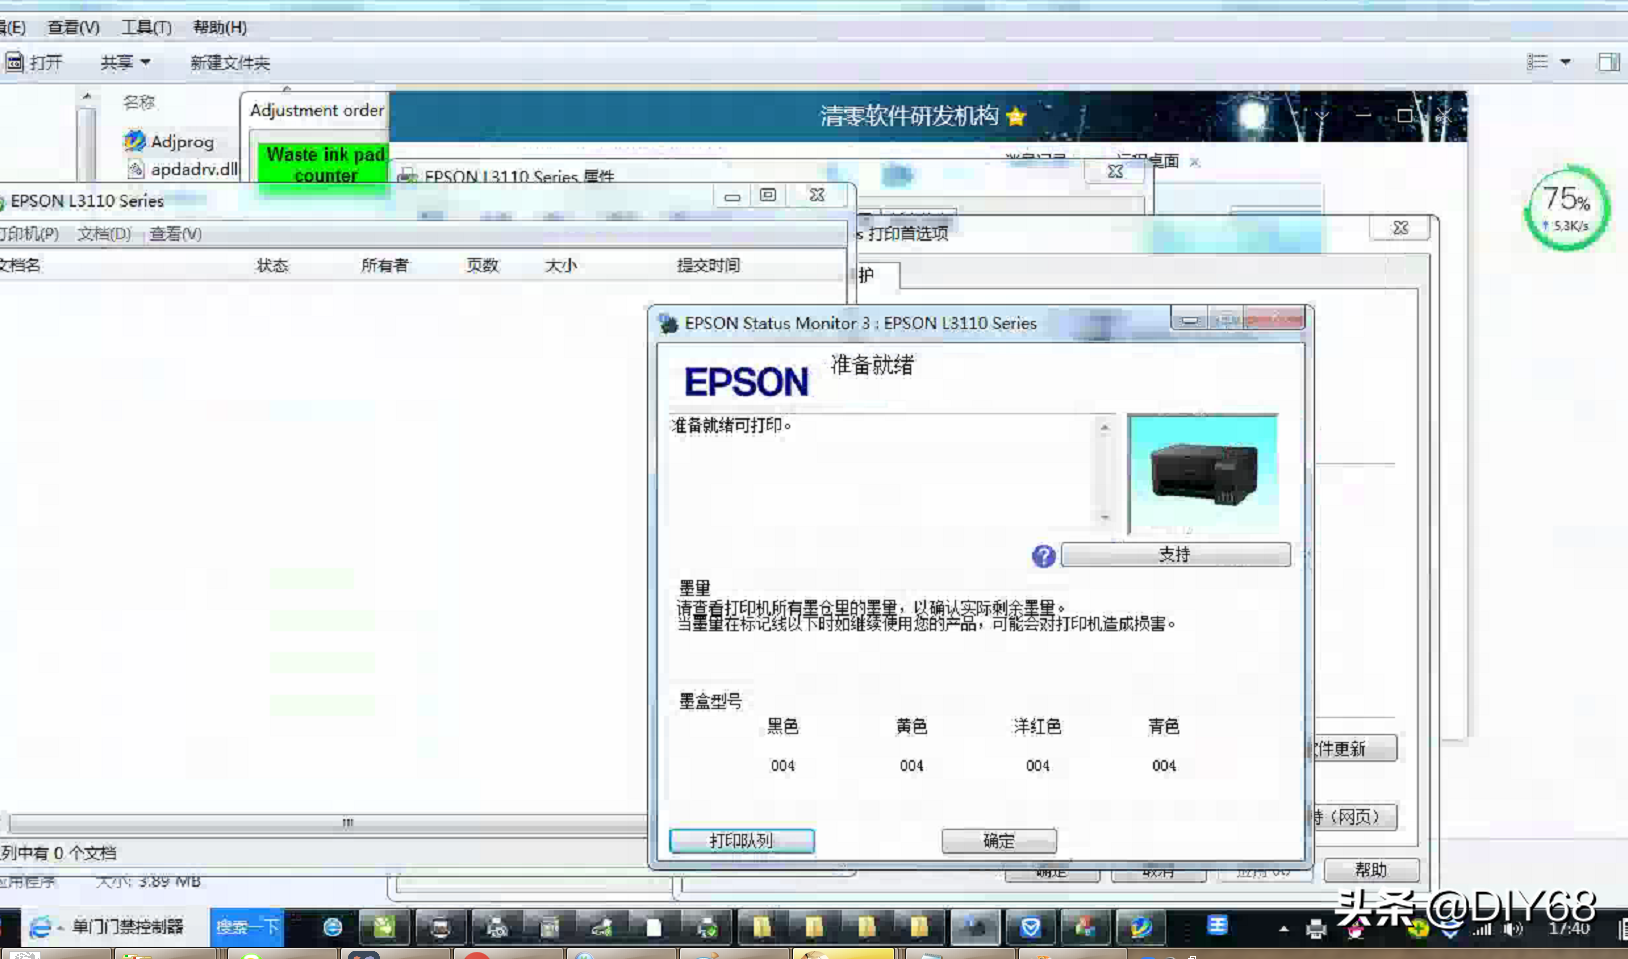 epson310打印机驱动安装知识,hp310打印机充墨办法看看